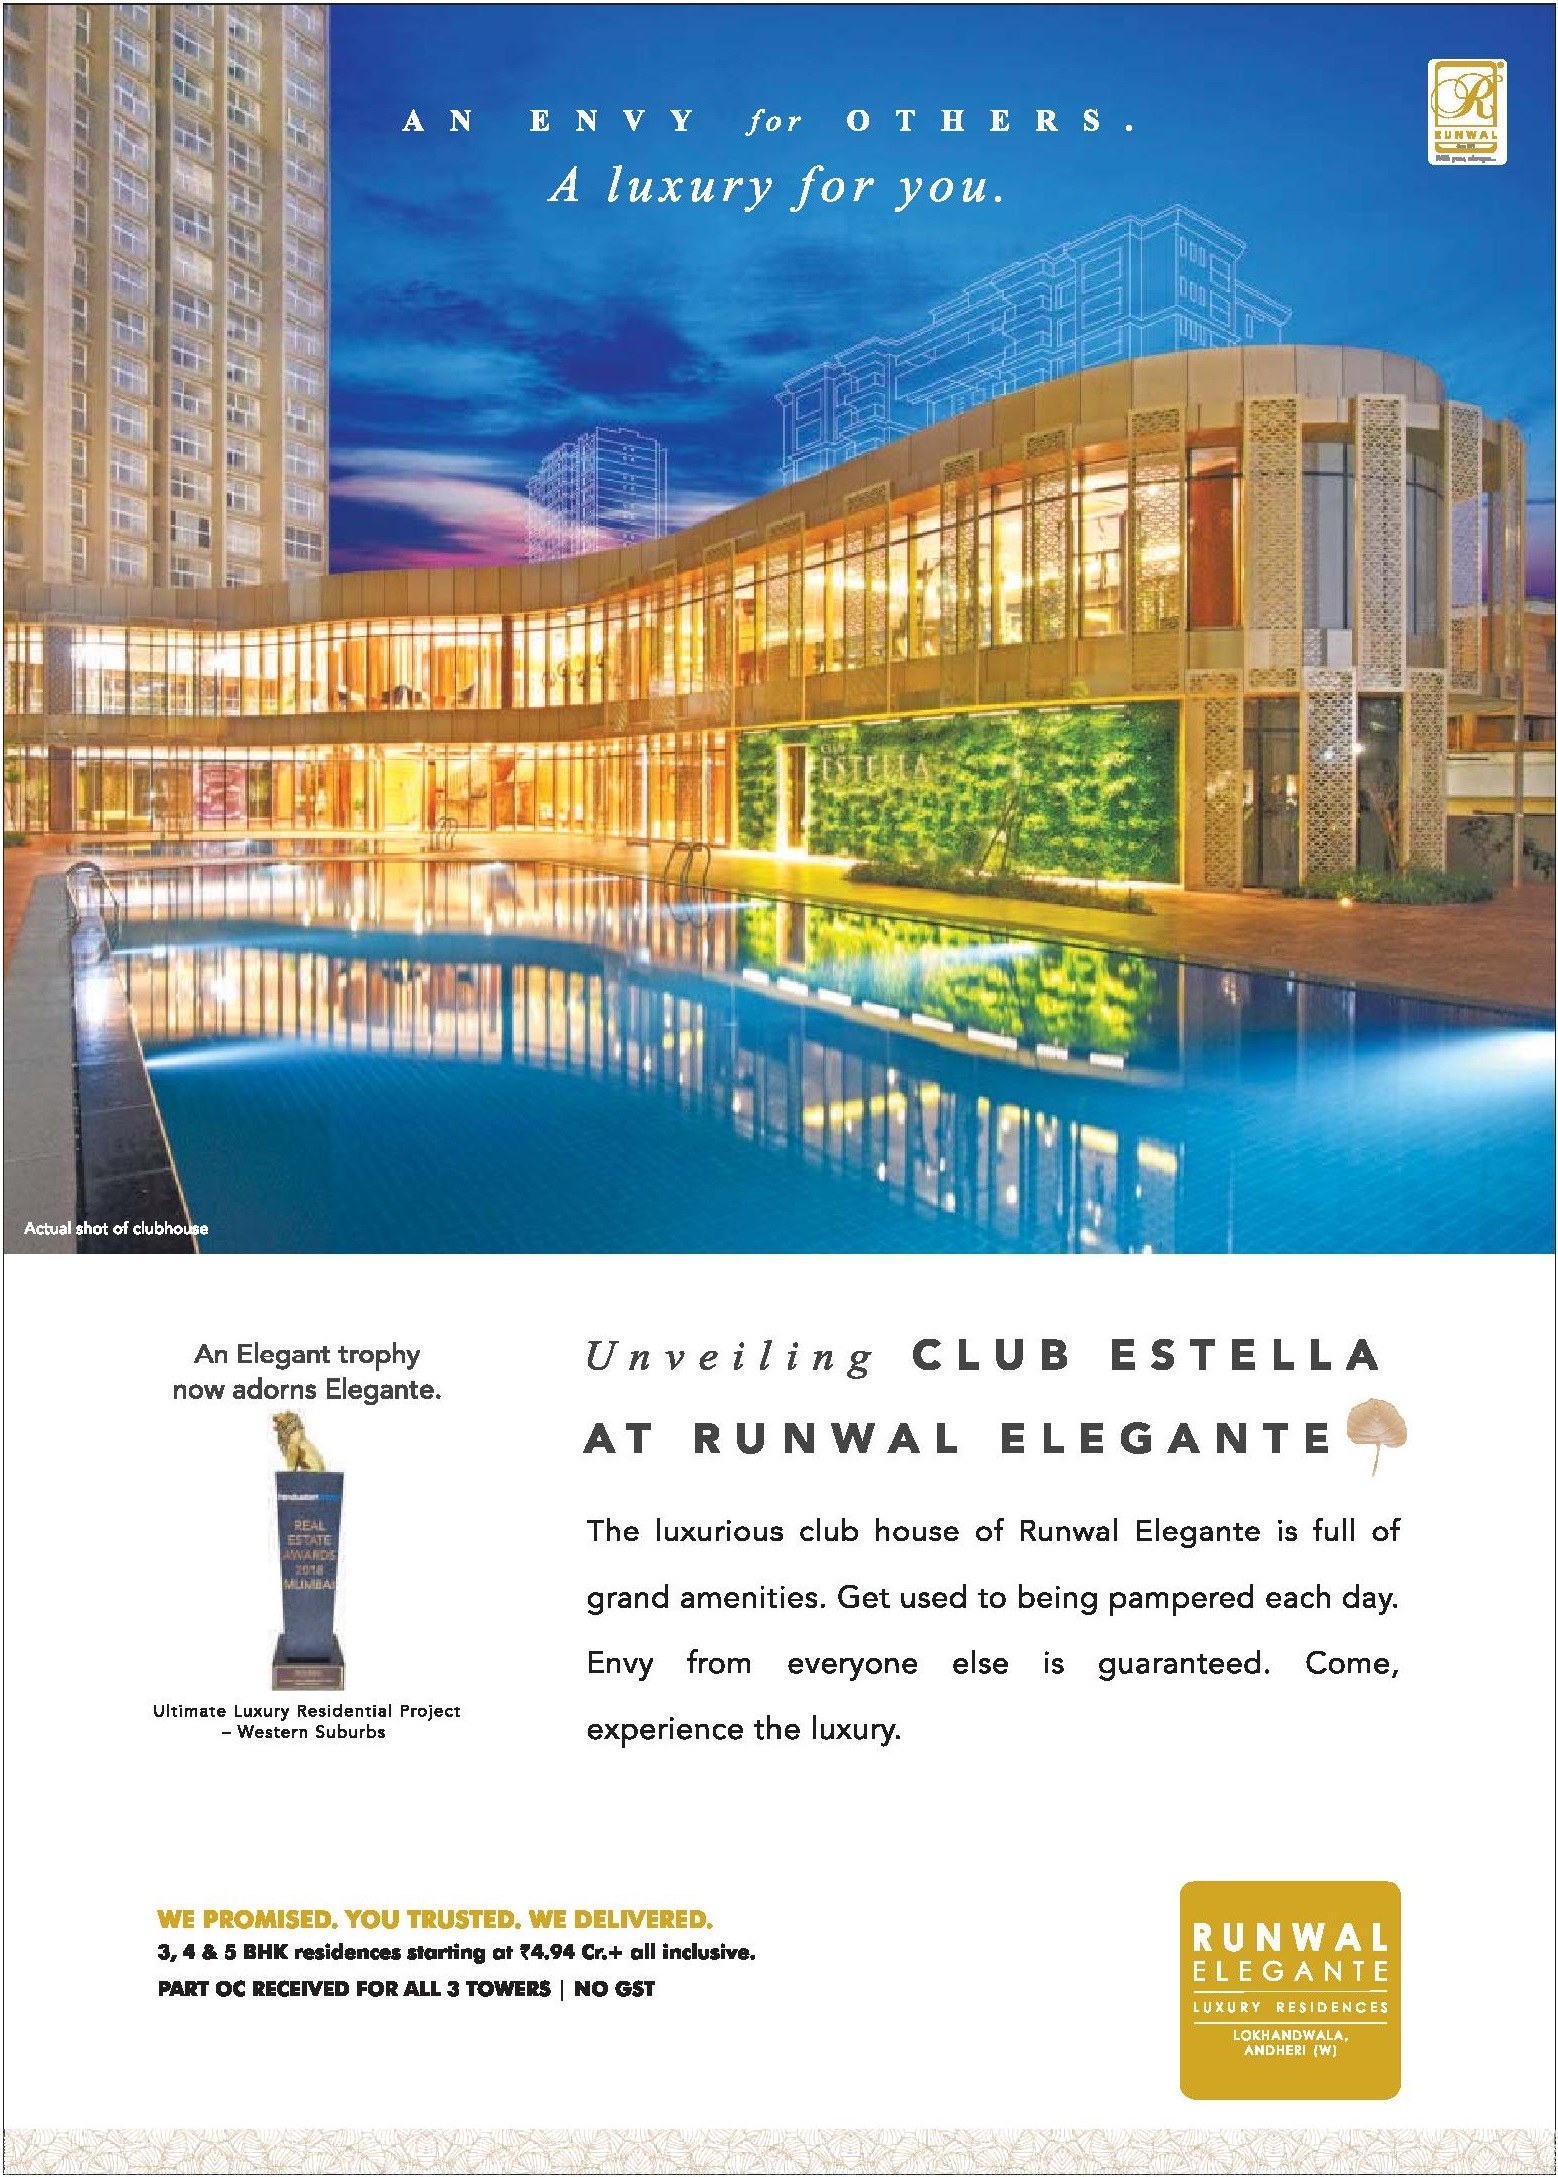 Unveiling Estella Club at Runwal Elegante in Lokhandwala, Mumbai Update